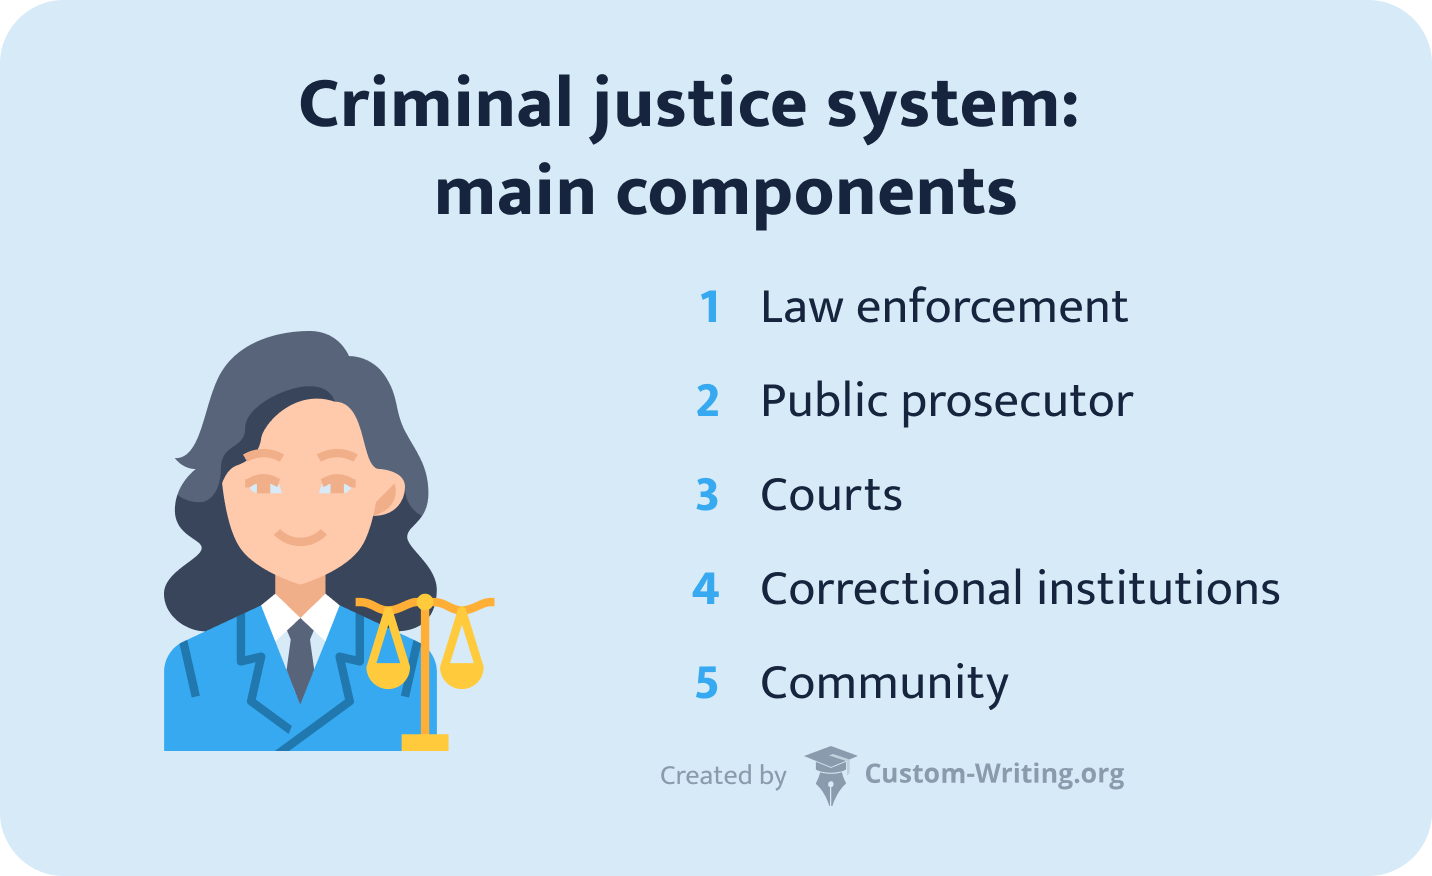 criminal justice research paper